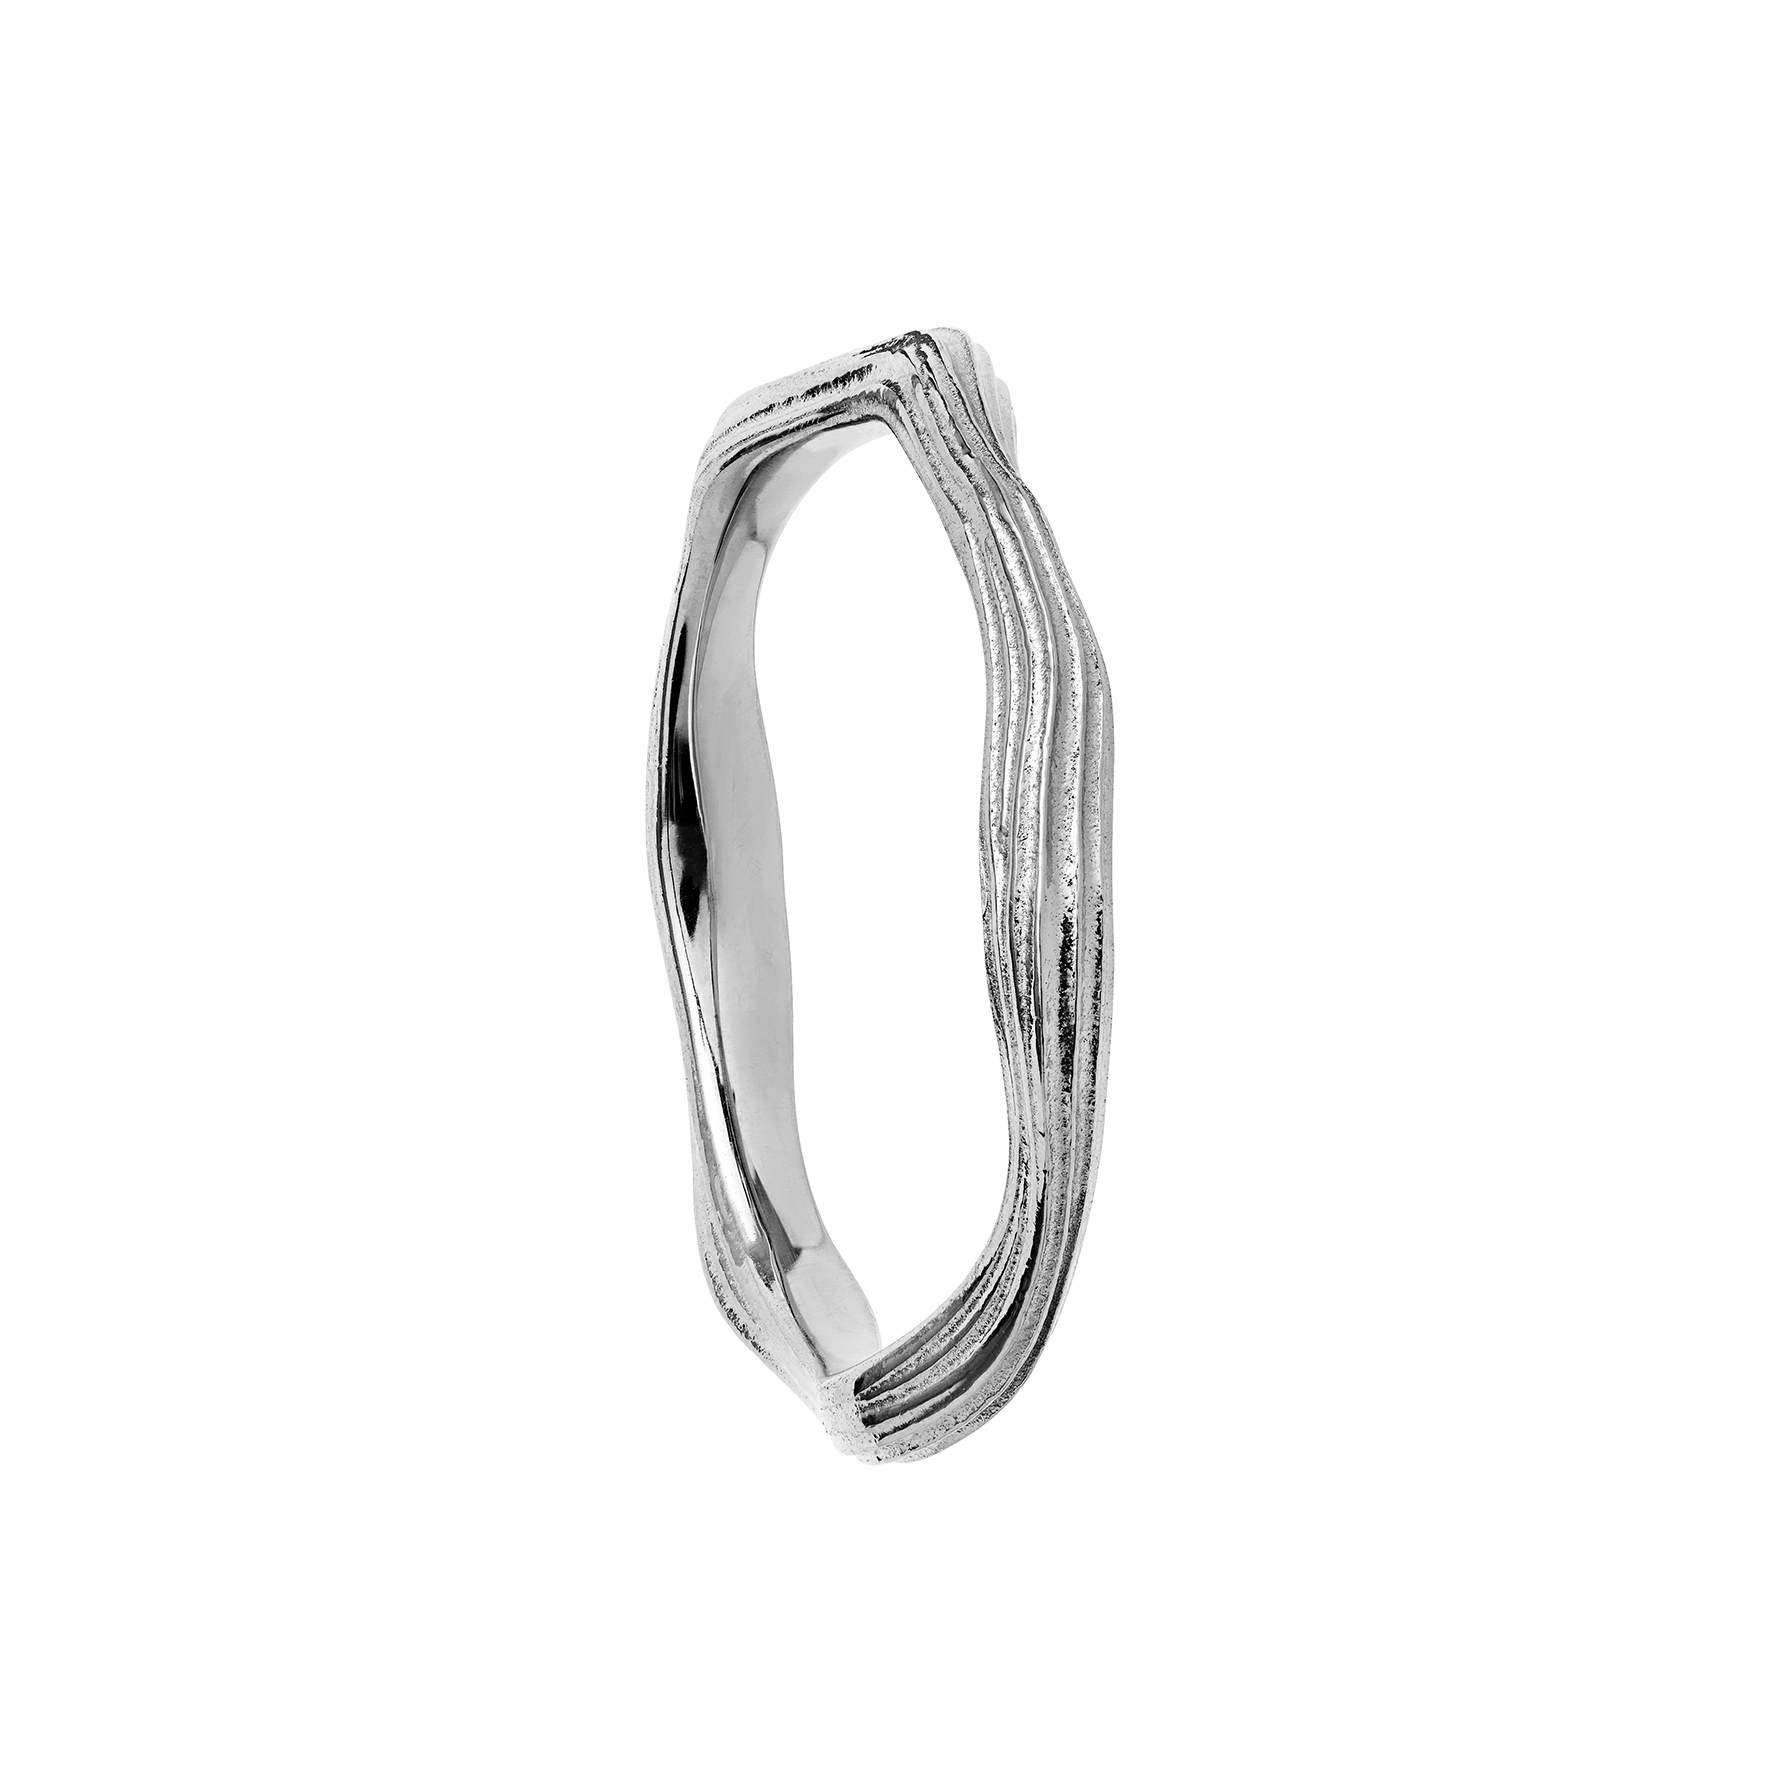 Rita Ring von Maanesten in Silber Sterling 925